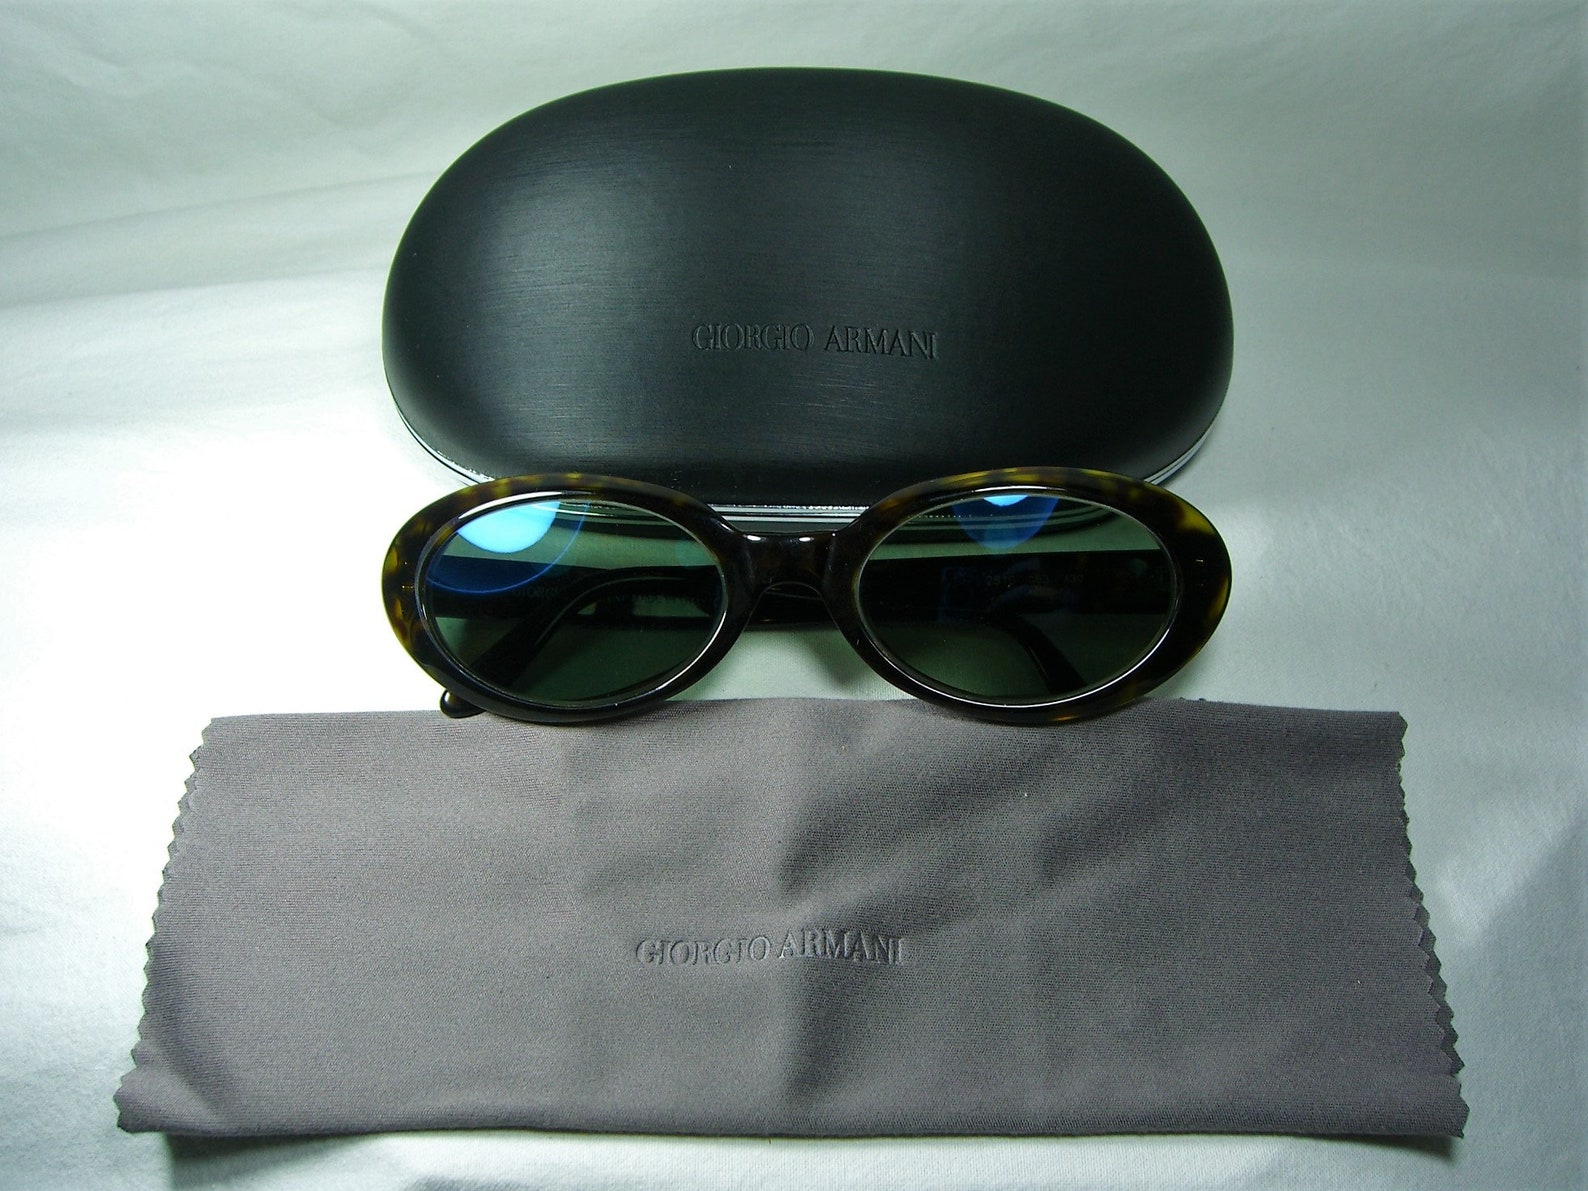 Giorgio Armani eyeglasses sunglasses Jackie-O Cat's | Etsy